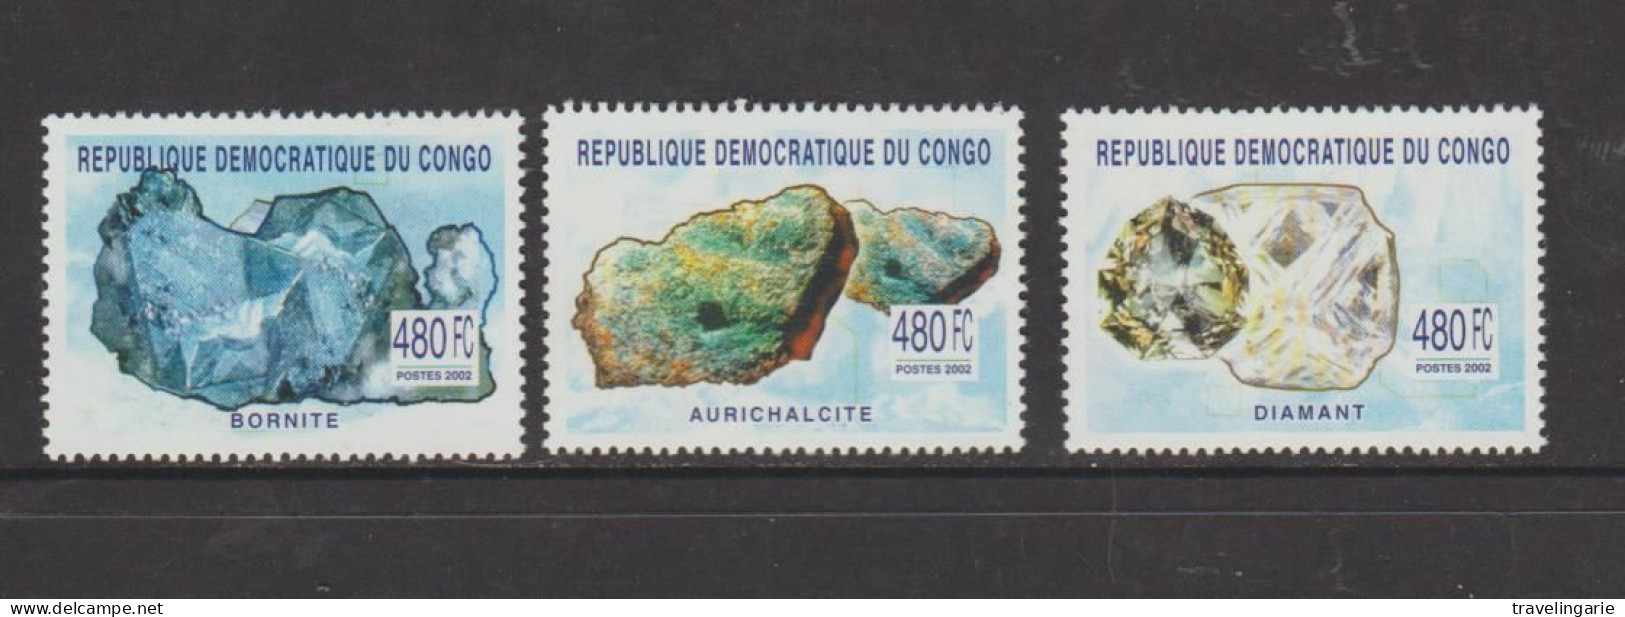 Democratic Republic Of Congo 2003 Minerals Set Of 3 MNH ** - Mint/hinged